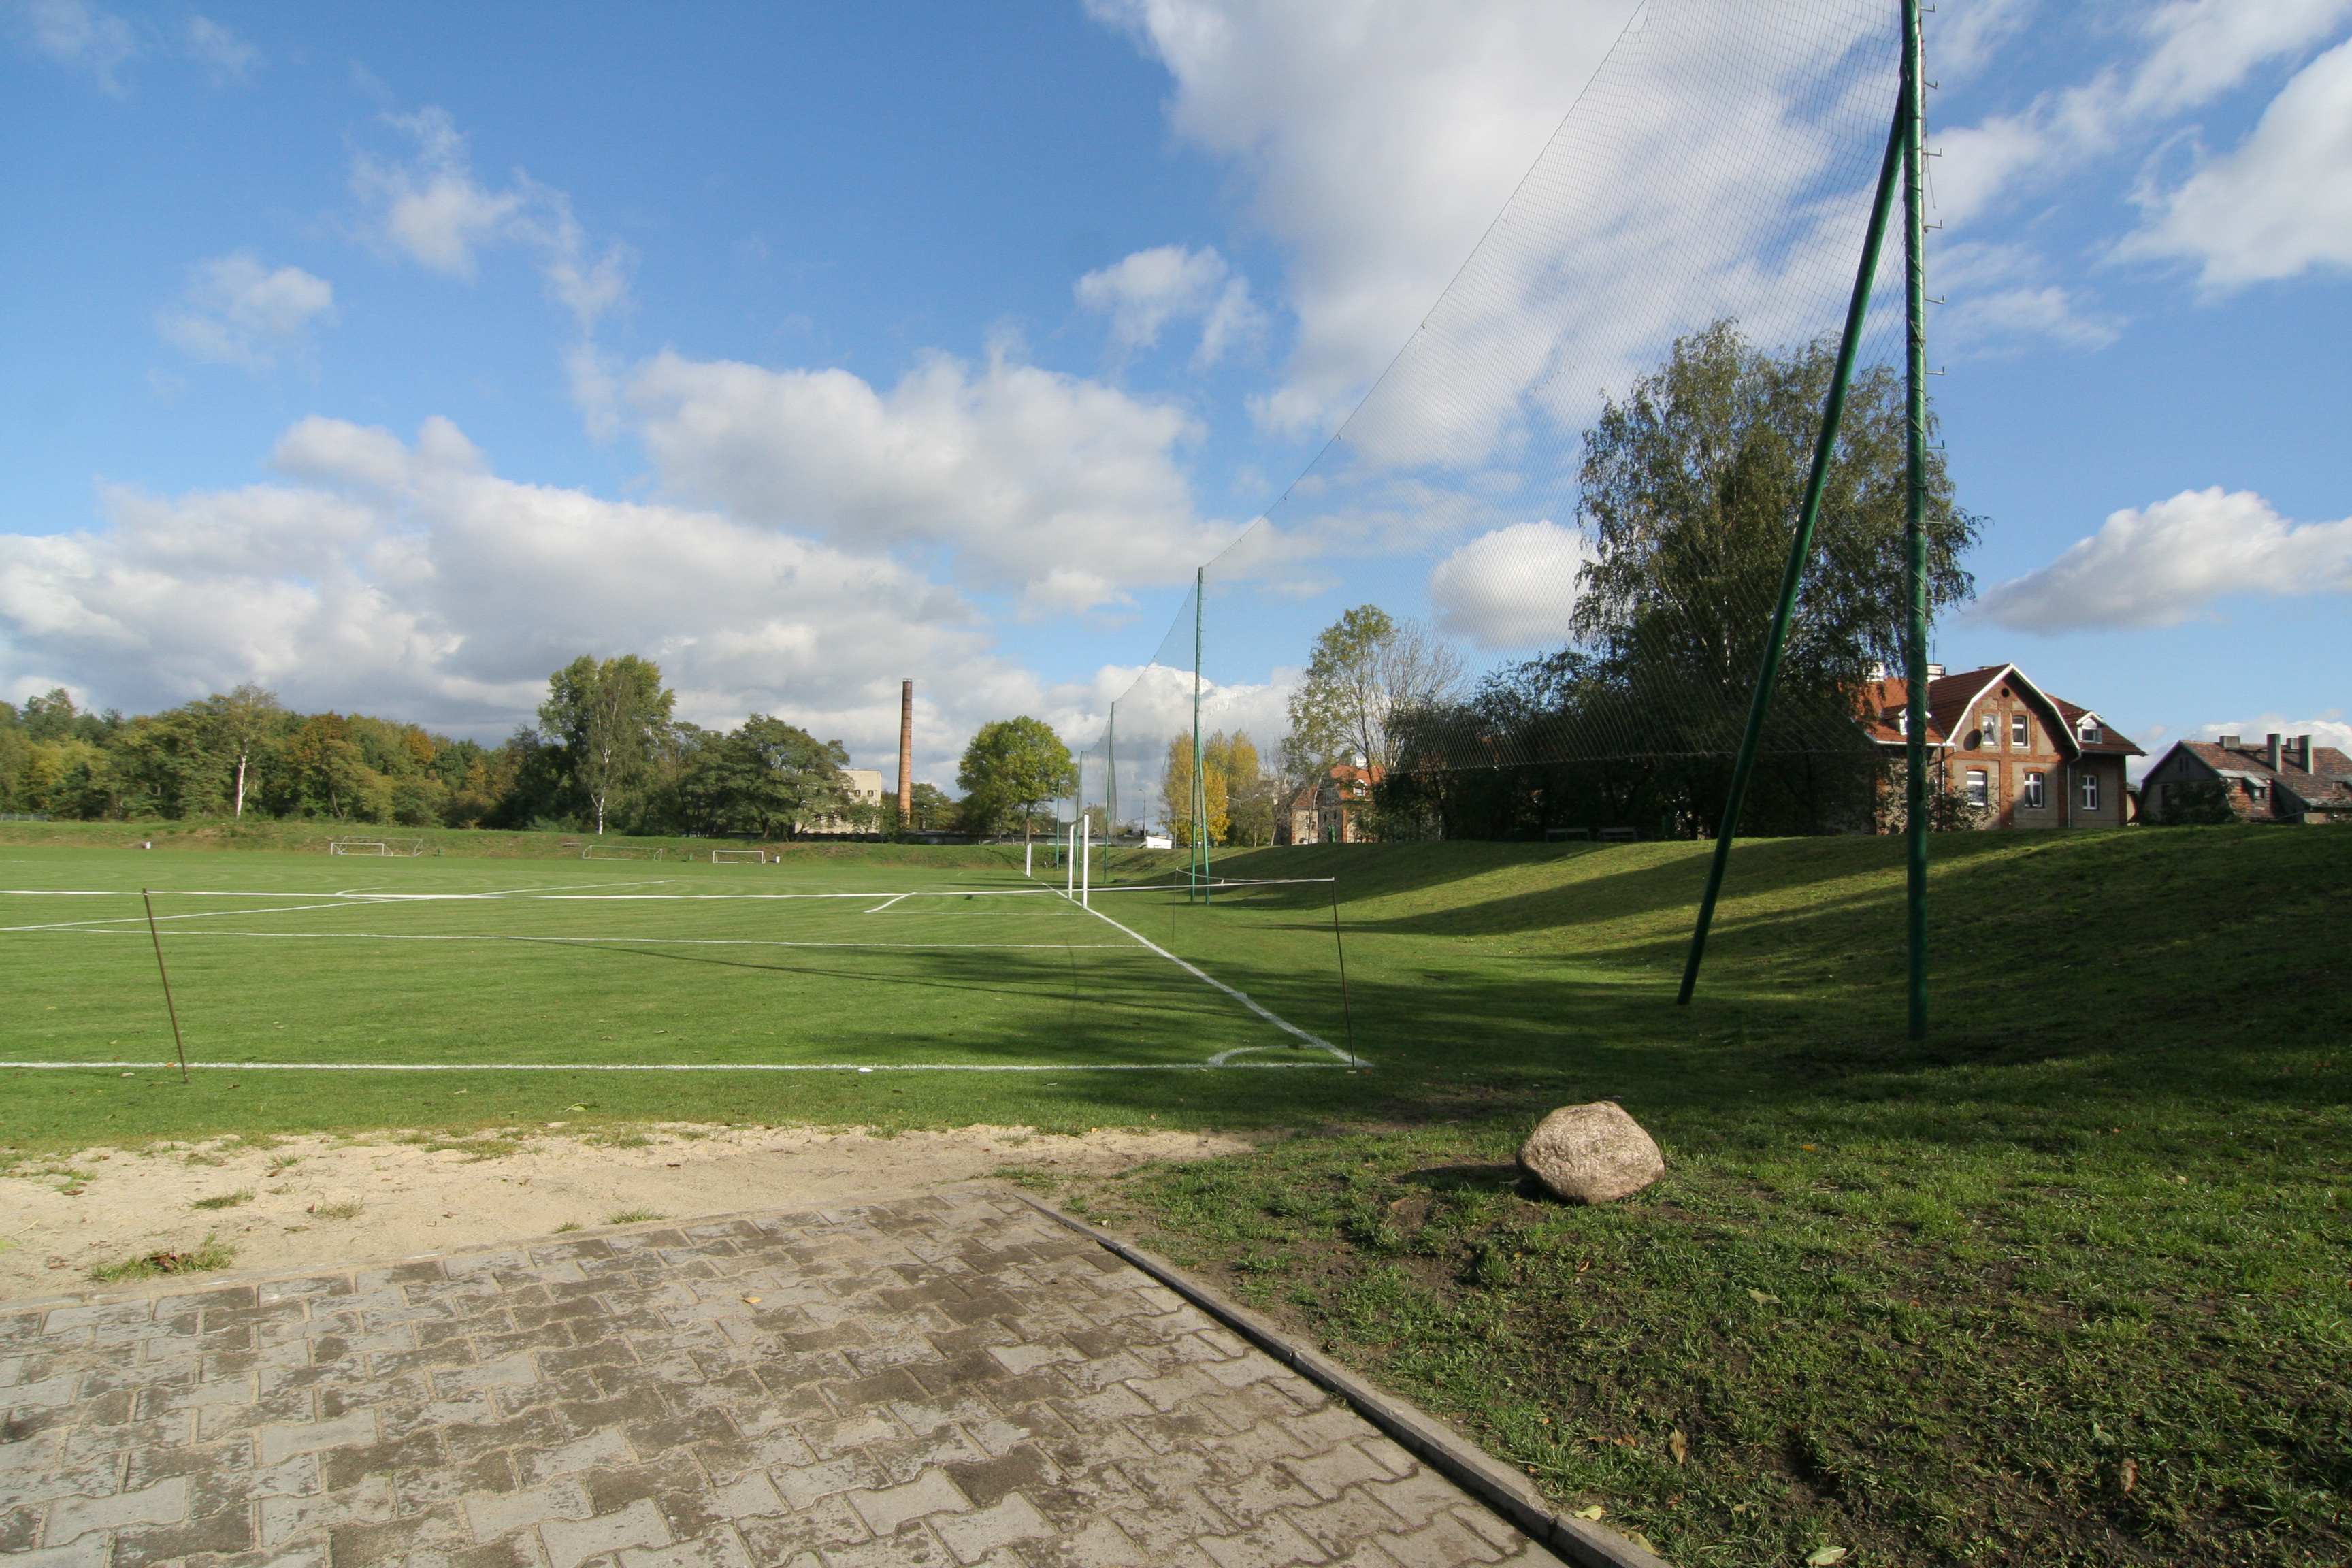 GKS Piast sports field in Szobiszowice